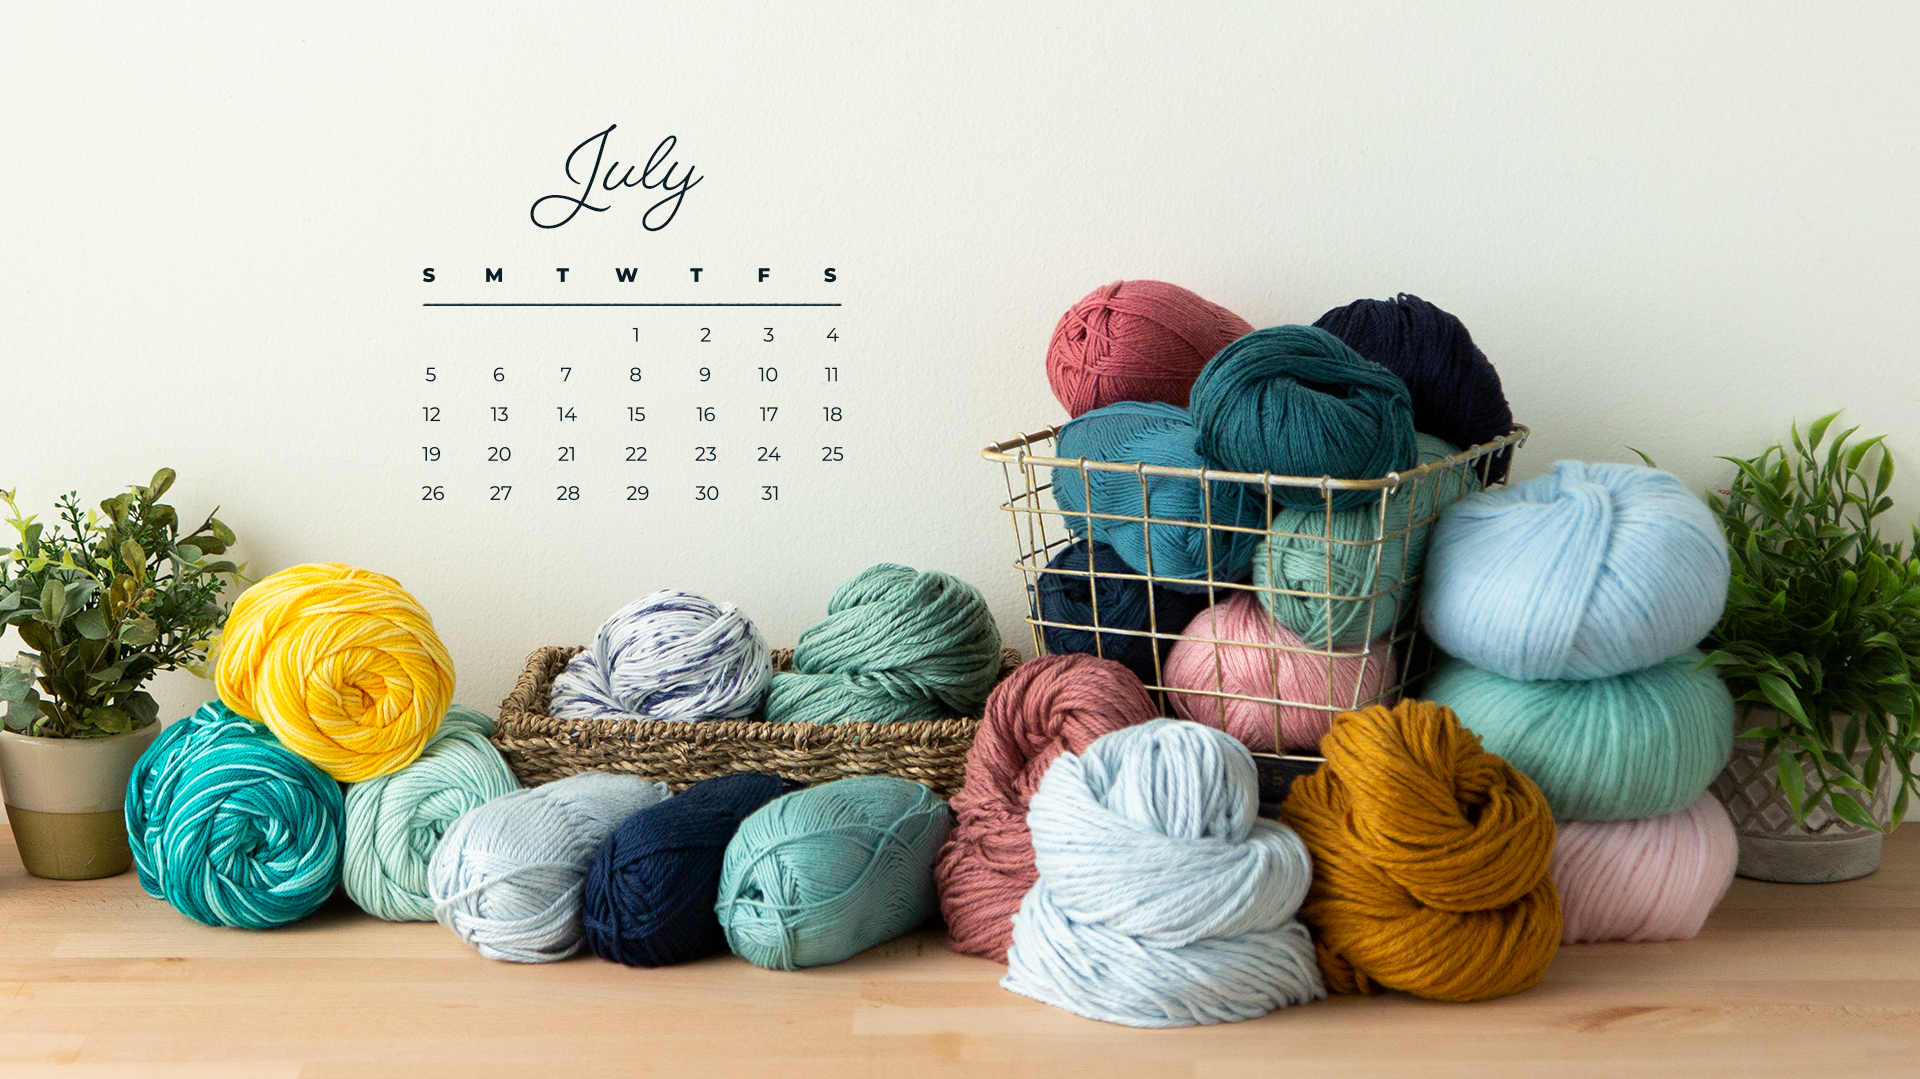 Free Downloadable July 2020 Calendar The Knit Picks Staff Knitting Blog